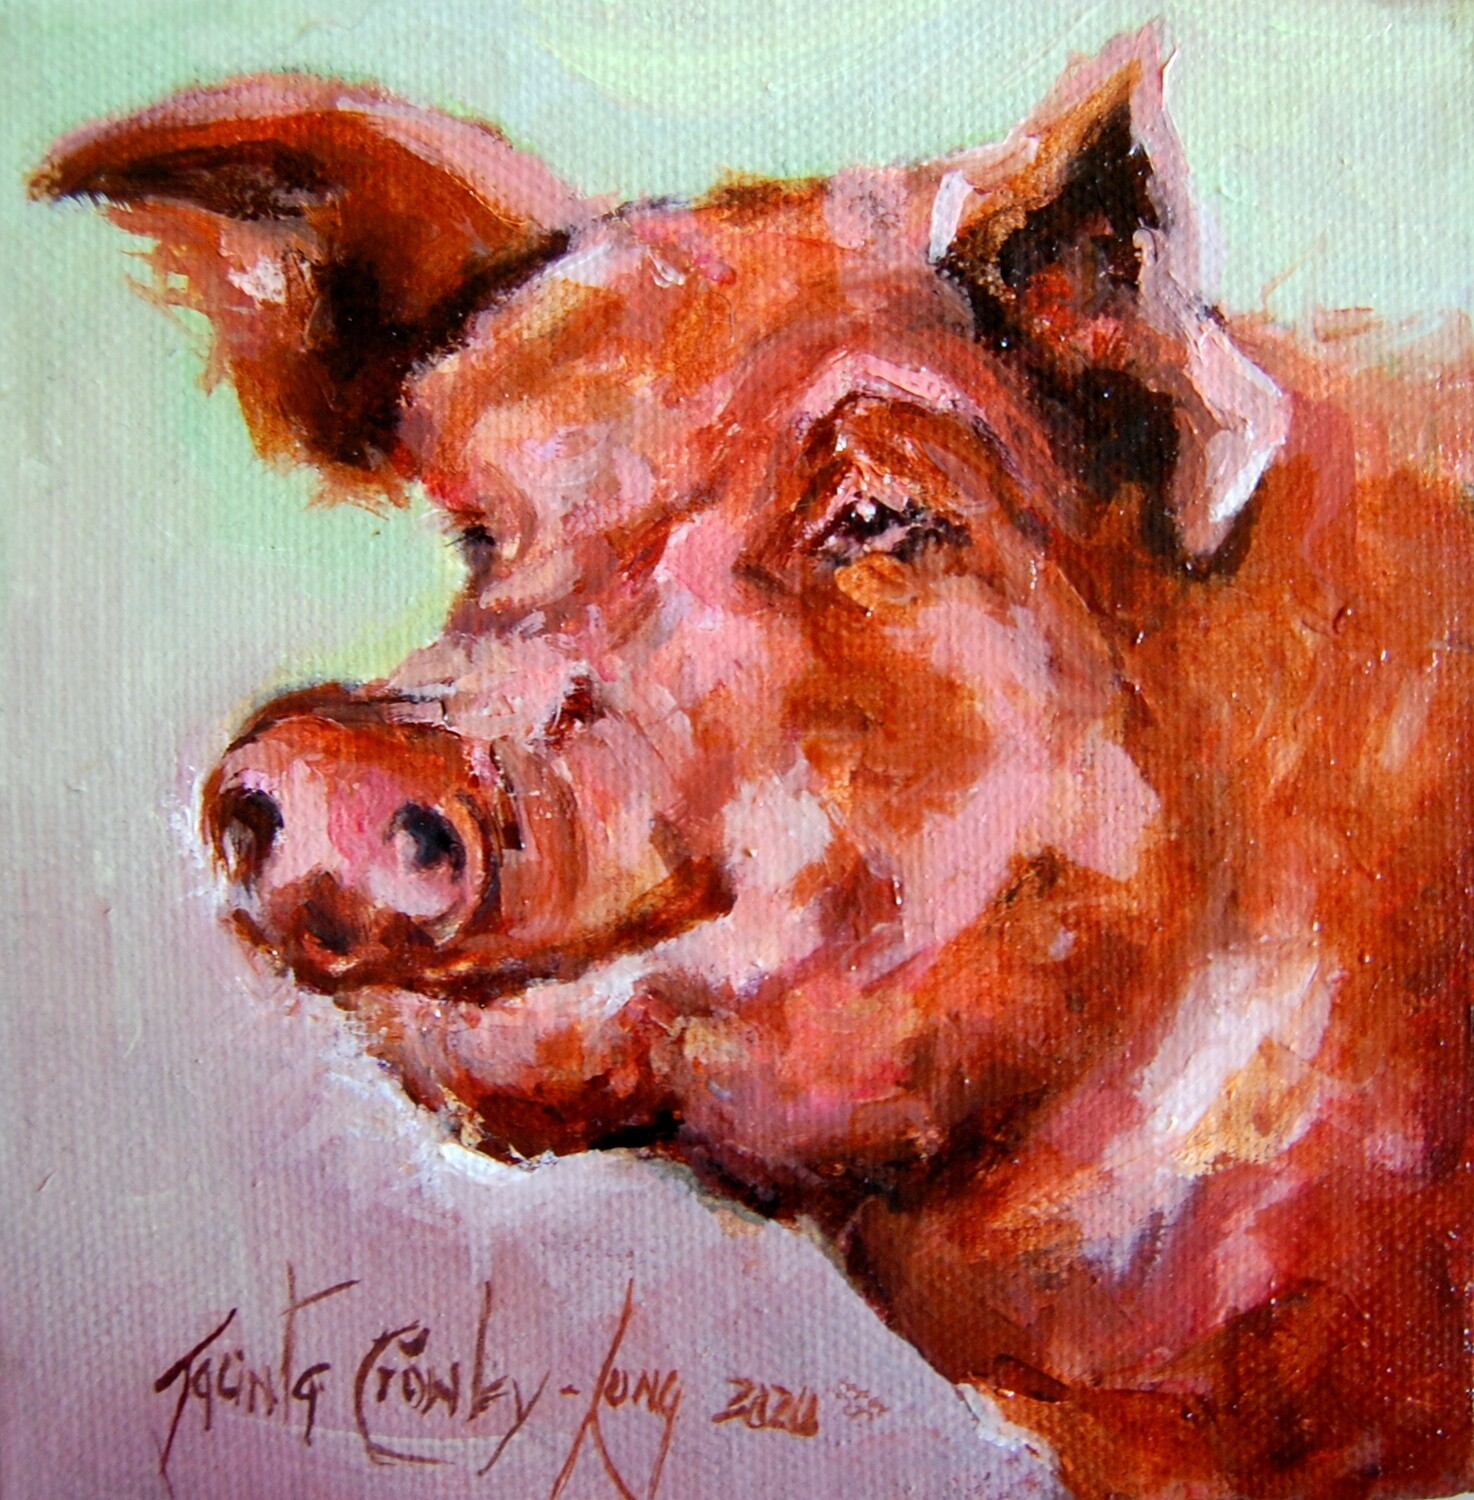 PIG-malion (6 x 6")